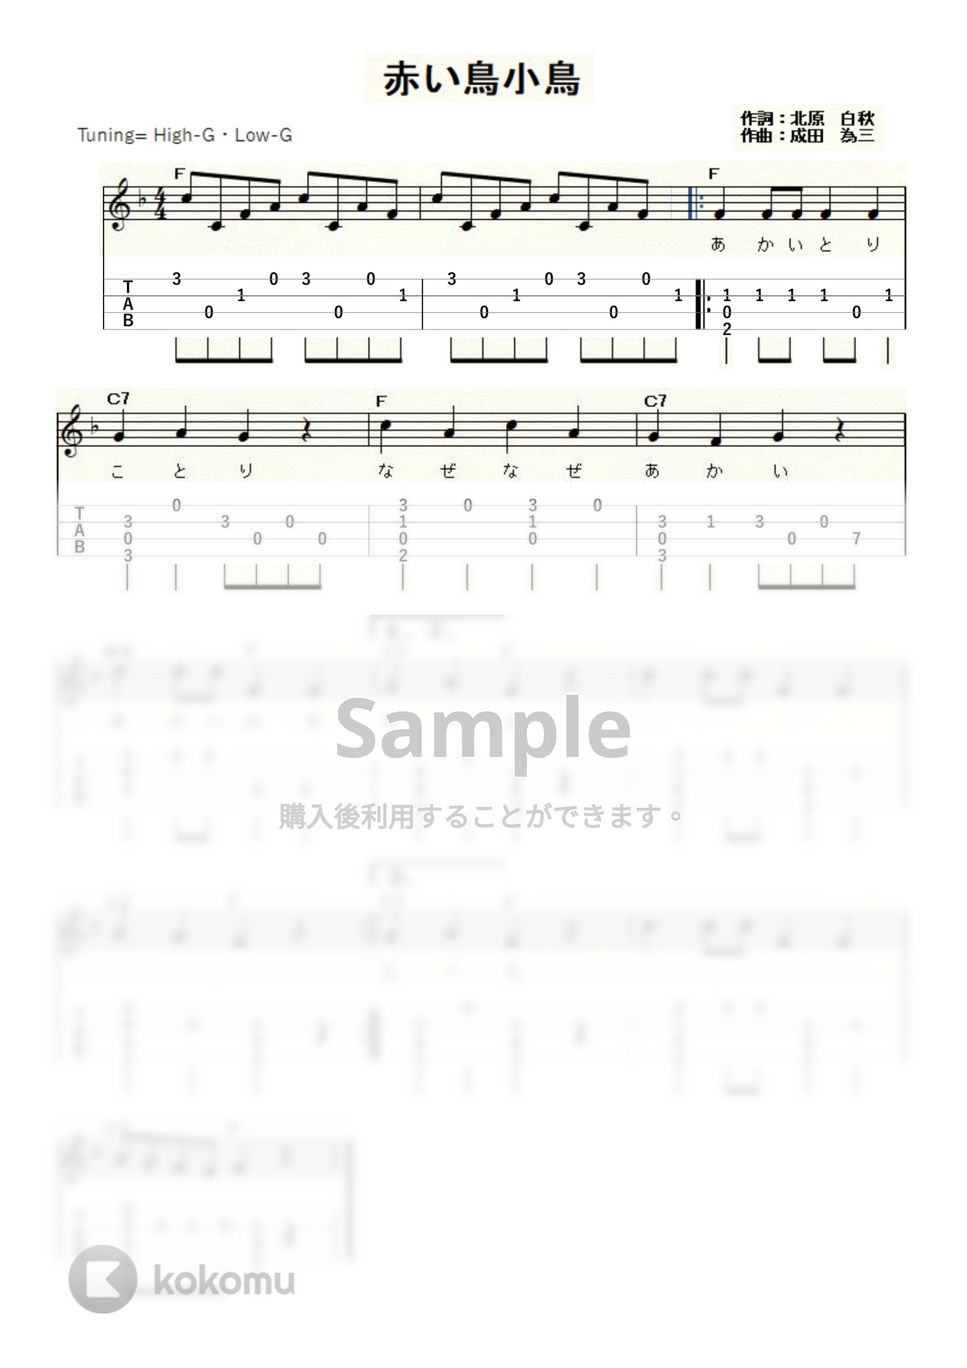 赤い鳥小鳥 (ｳｸﾚﾚｿﾛ / High-G・Low-G / 初級～中級) by ukulelepapa